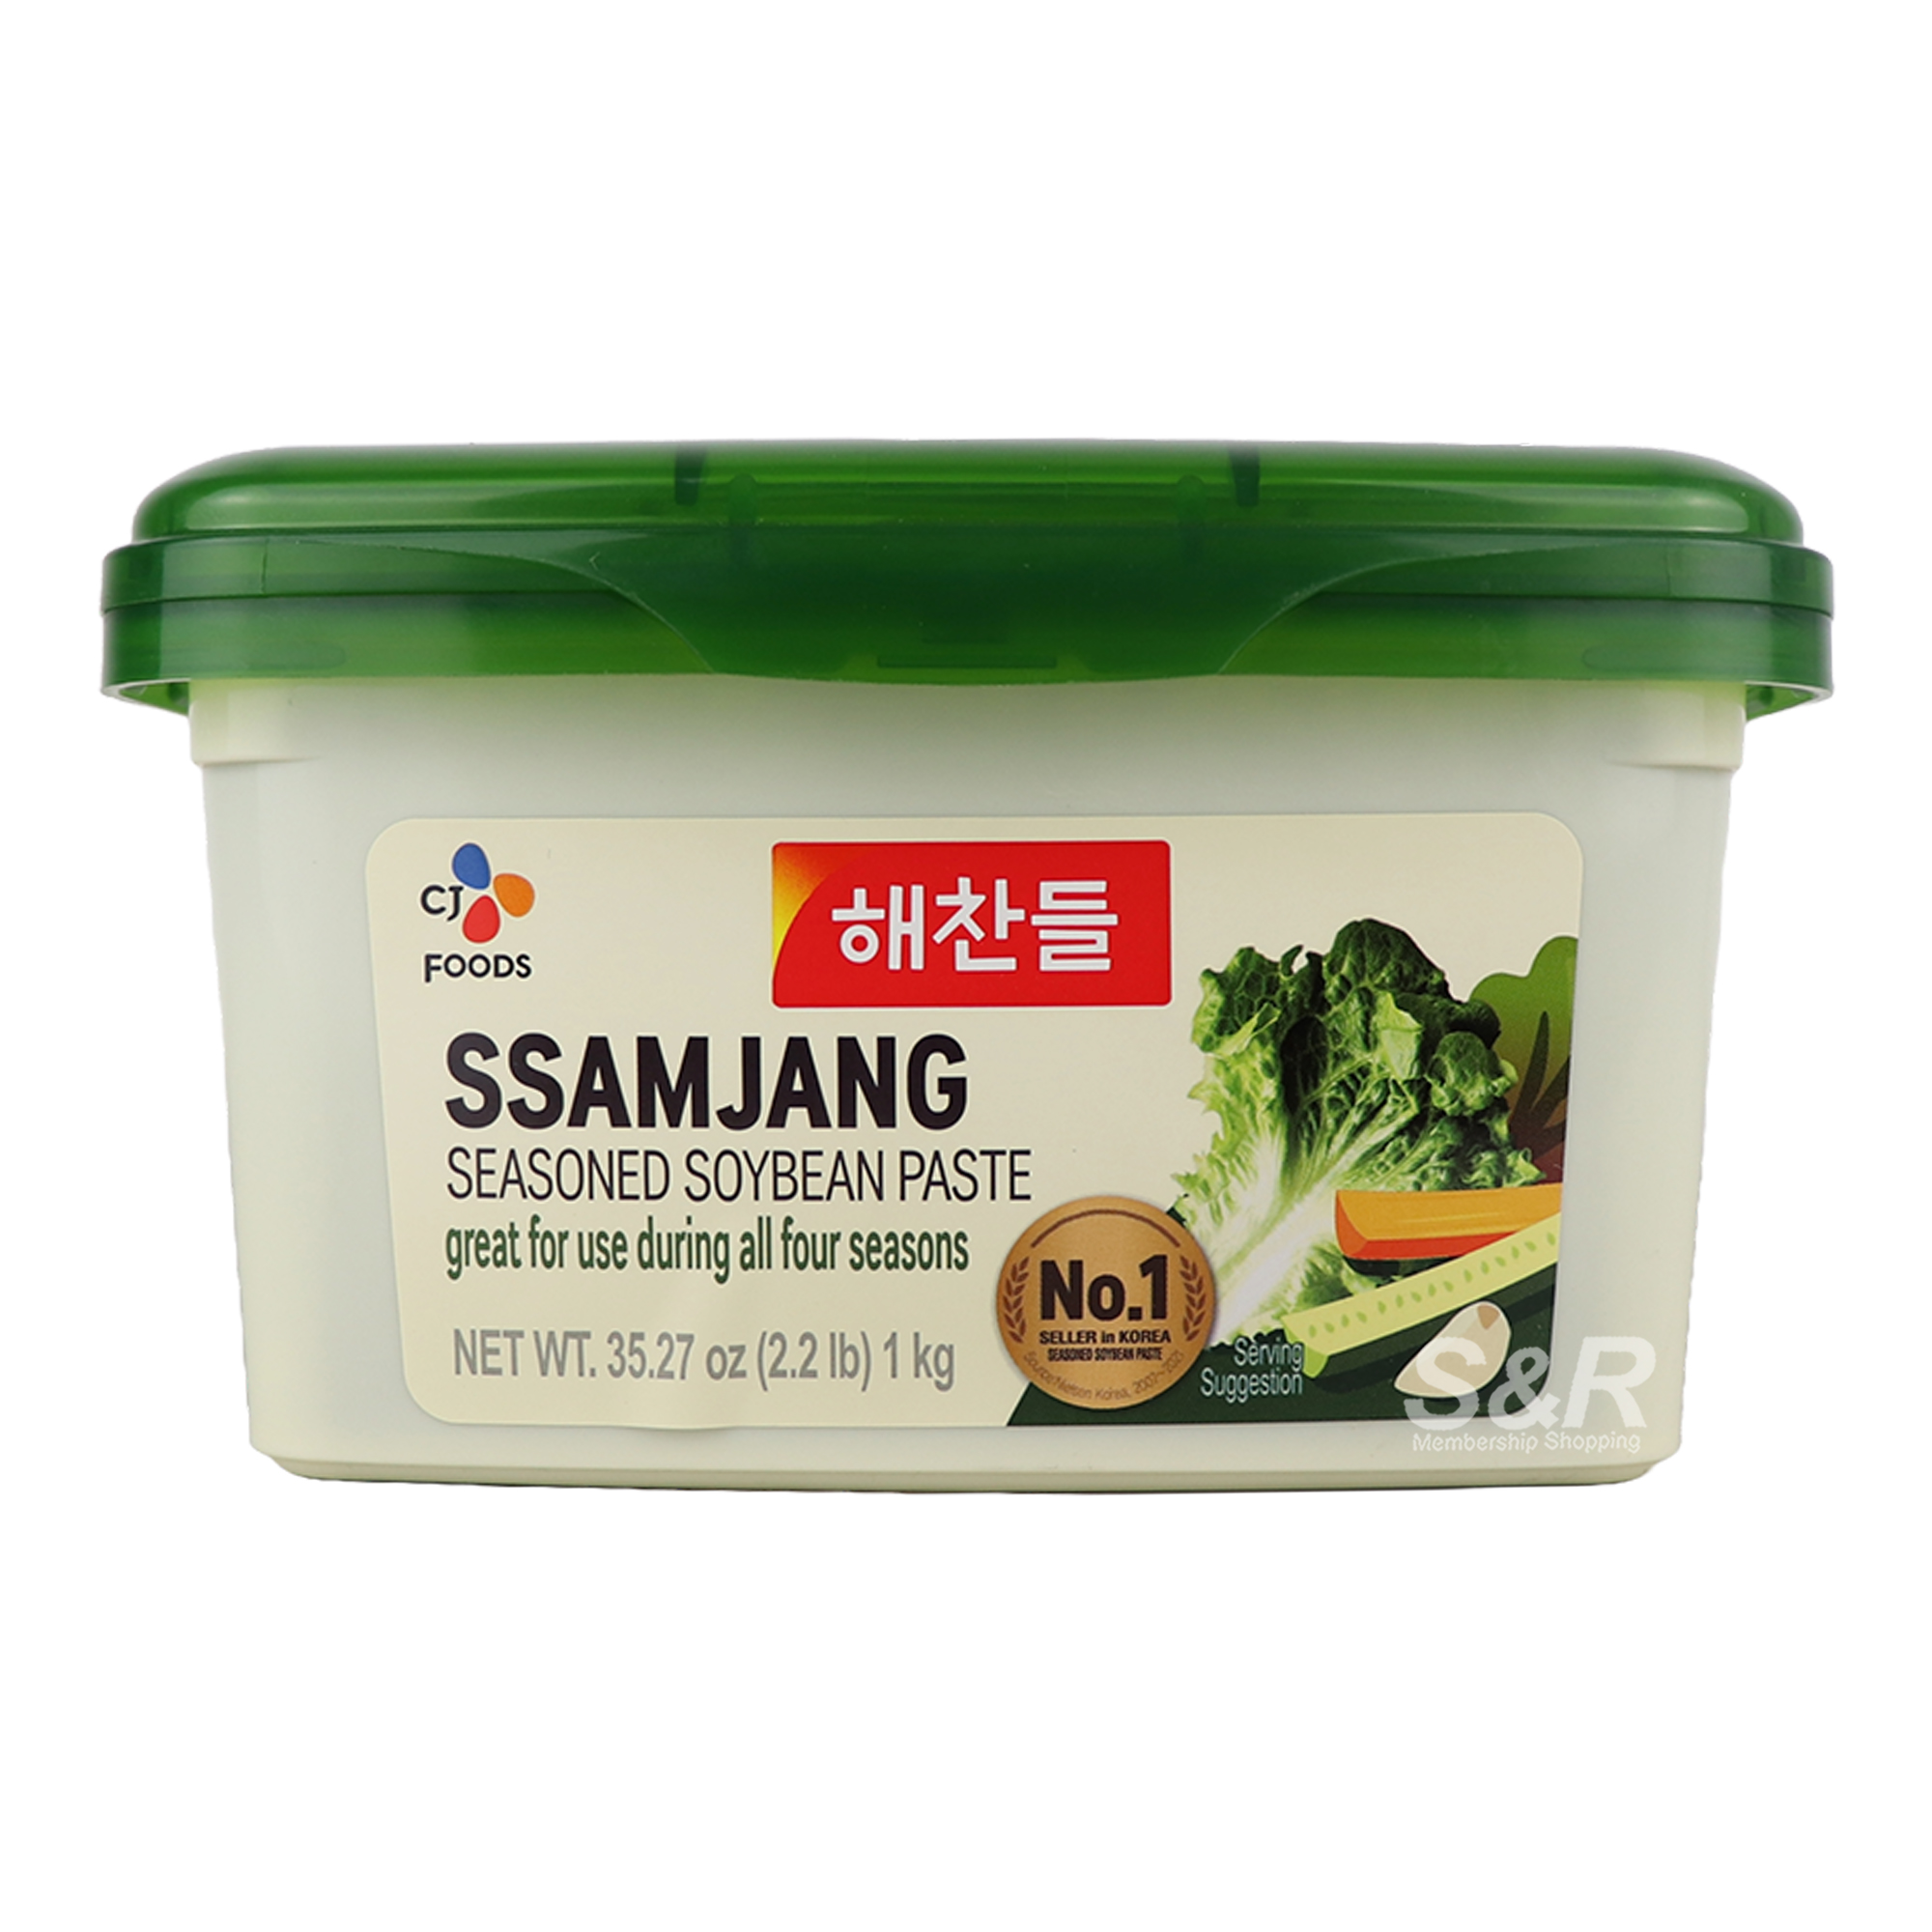 Ssamjang Seasoned Soybean Paste Original Flavor 1kg